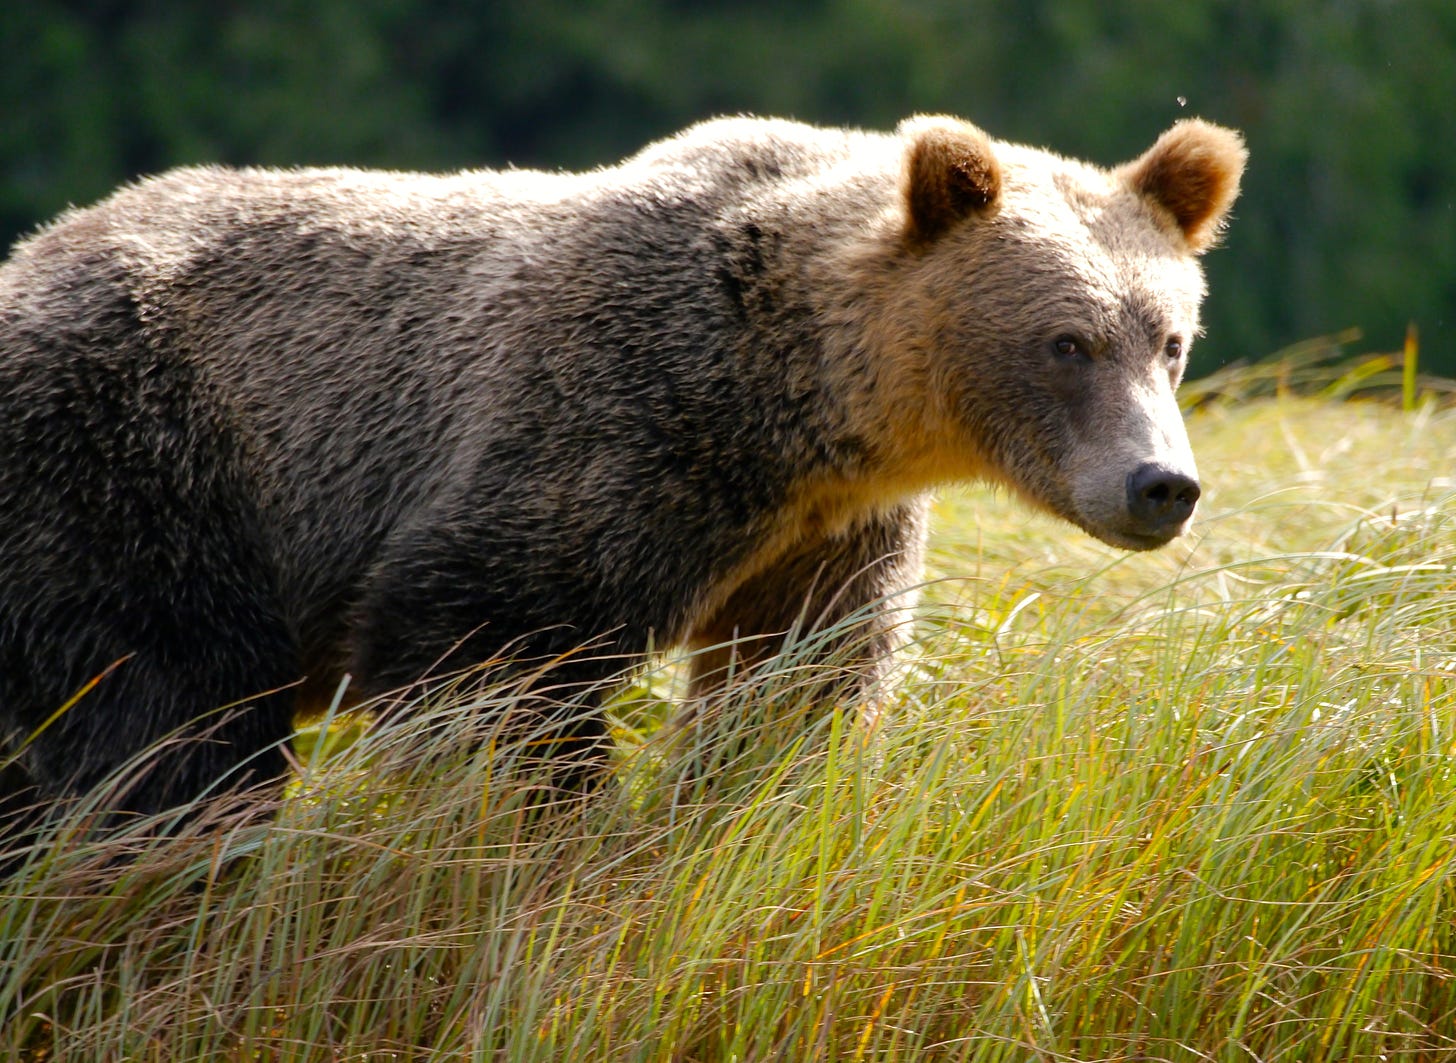 Grizzly bear in field